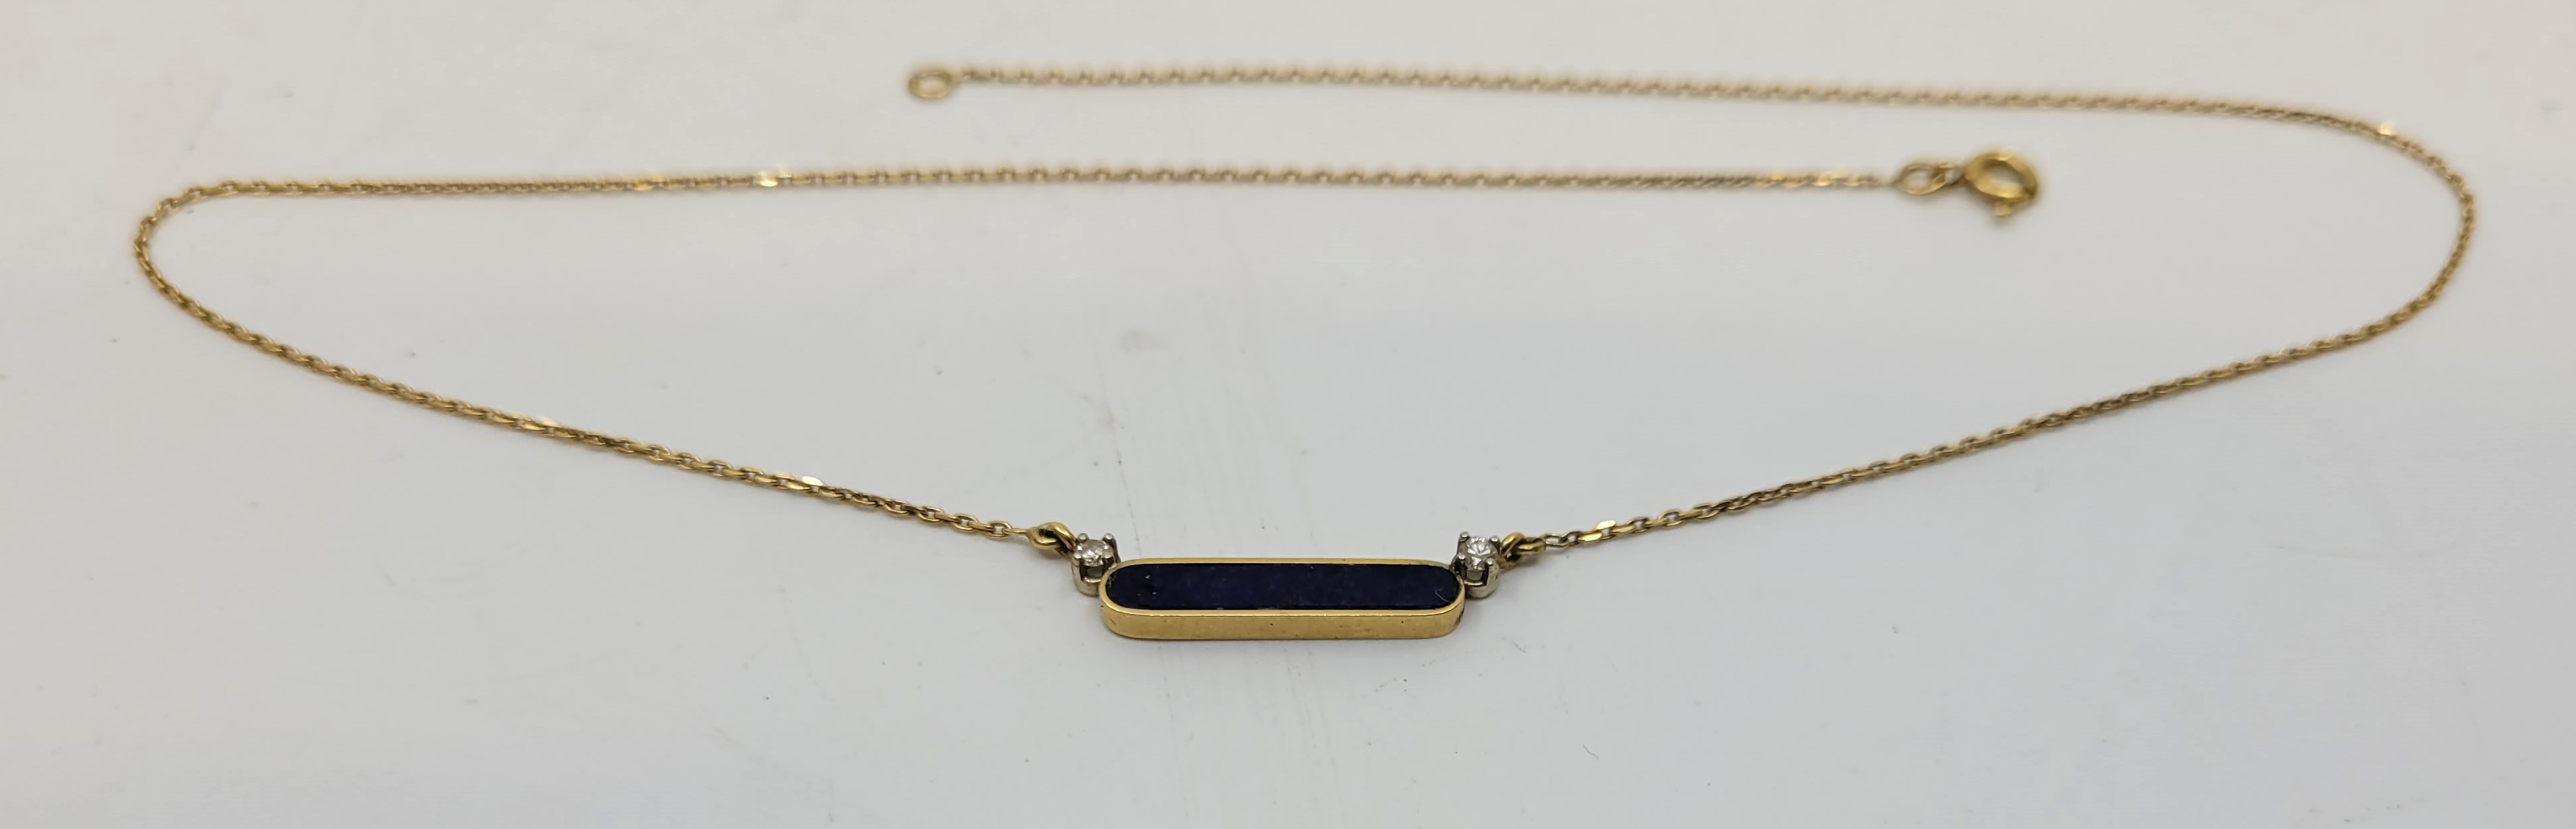 An 18ct. yellow gold lapis lazuli and diamond choker pendant necklace, fashioned as horizontal bar - Image 7 of 9